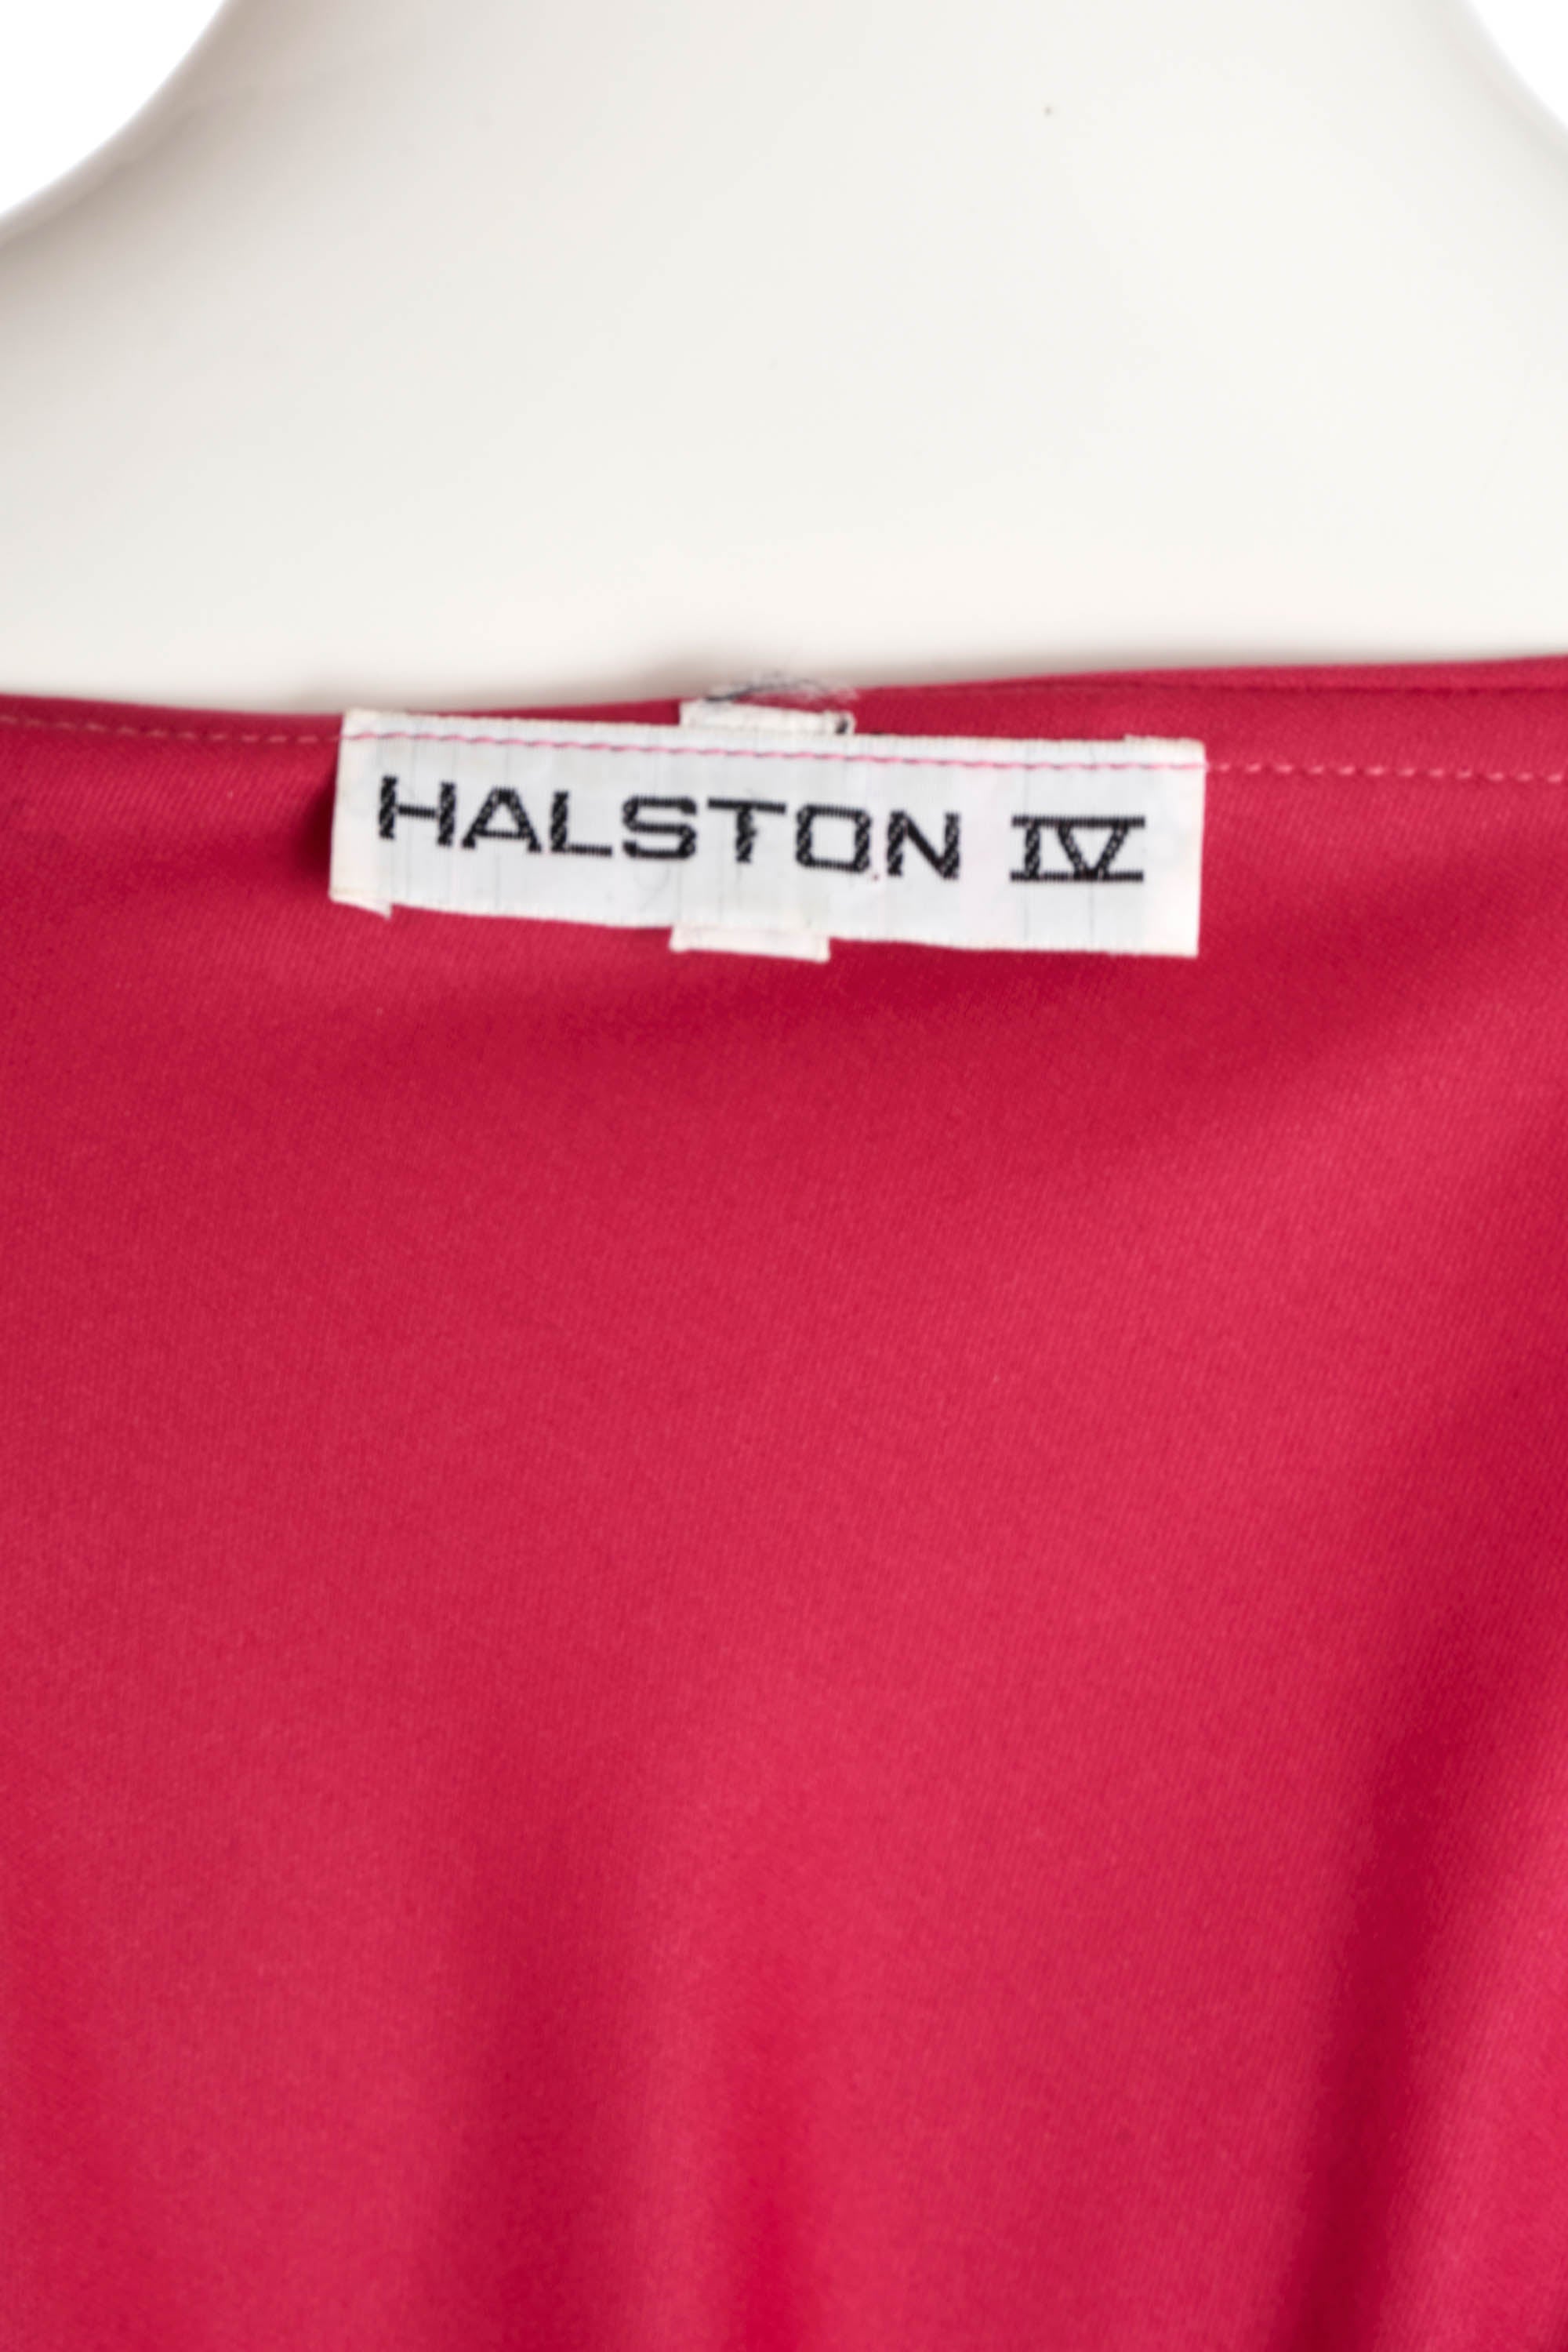 Halston IV 1970's Raspberry Maxi Dress